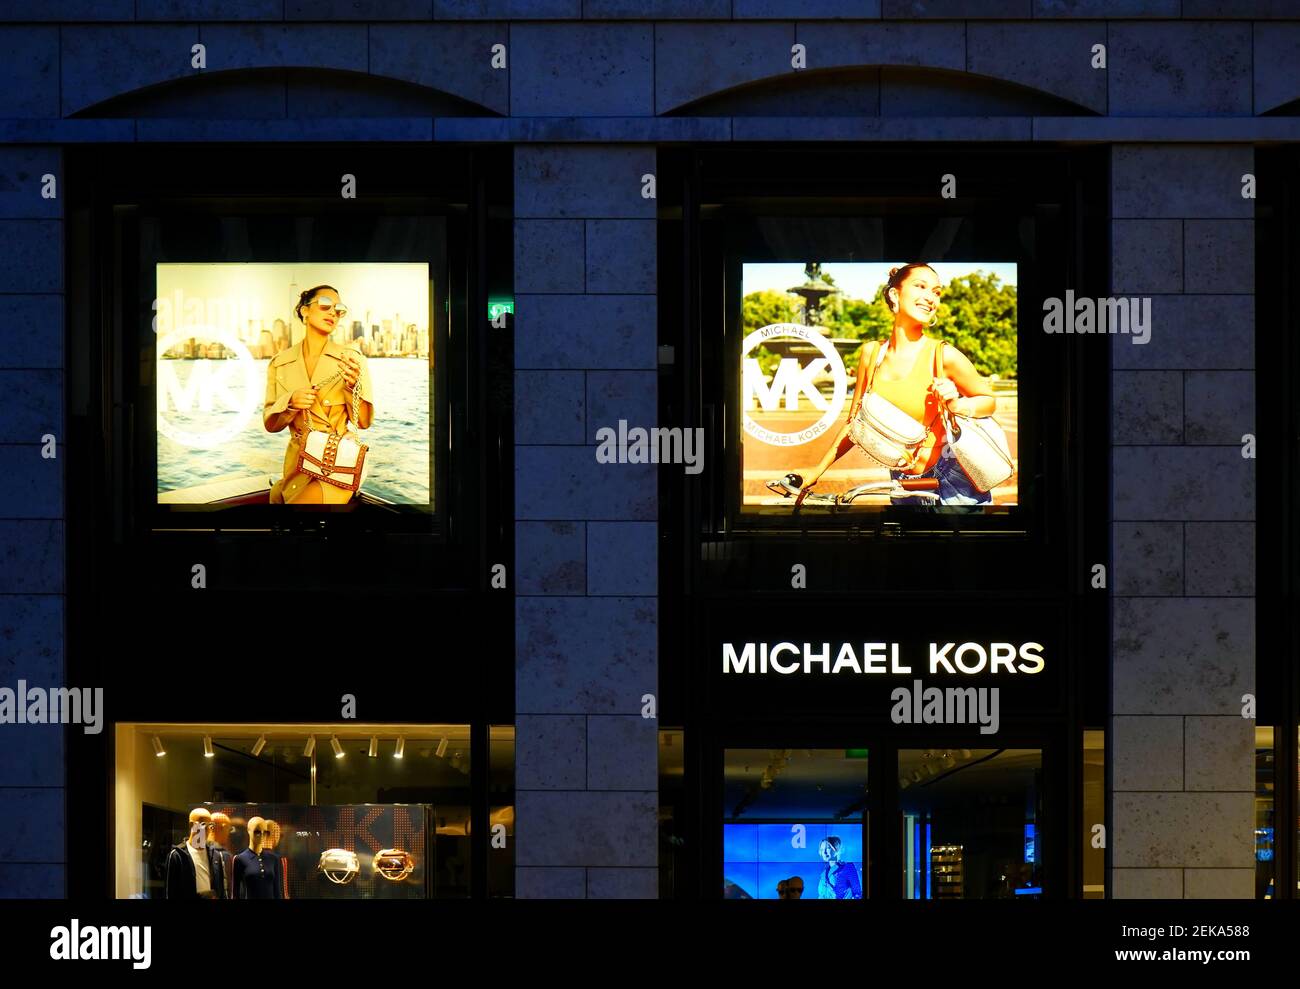 Santa Clara, CA USA - January 14, 2021: Michael Kors Fashion Designer Store  Editorial Stock Image - Image of cosmetics, american: 207991239